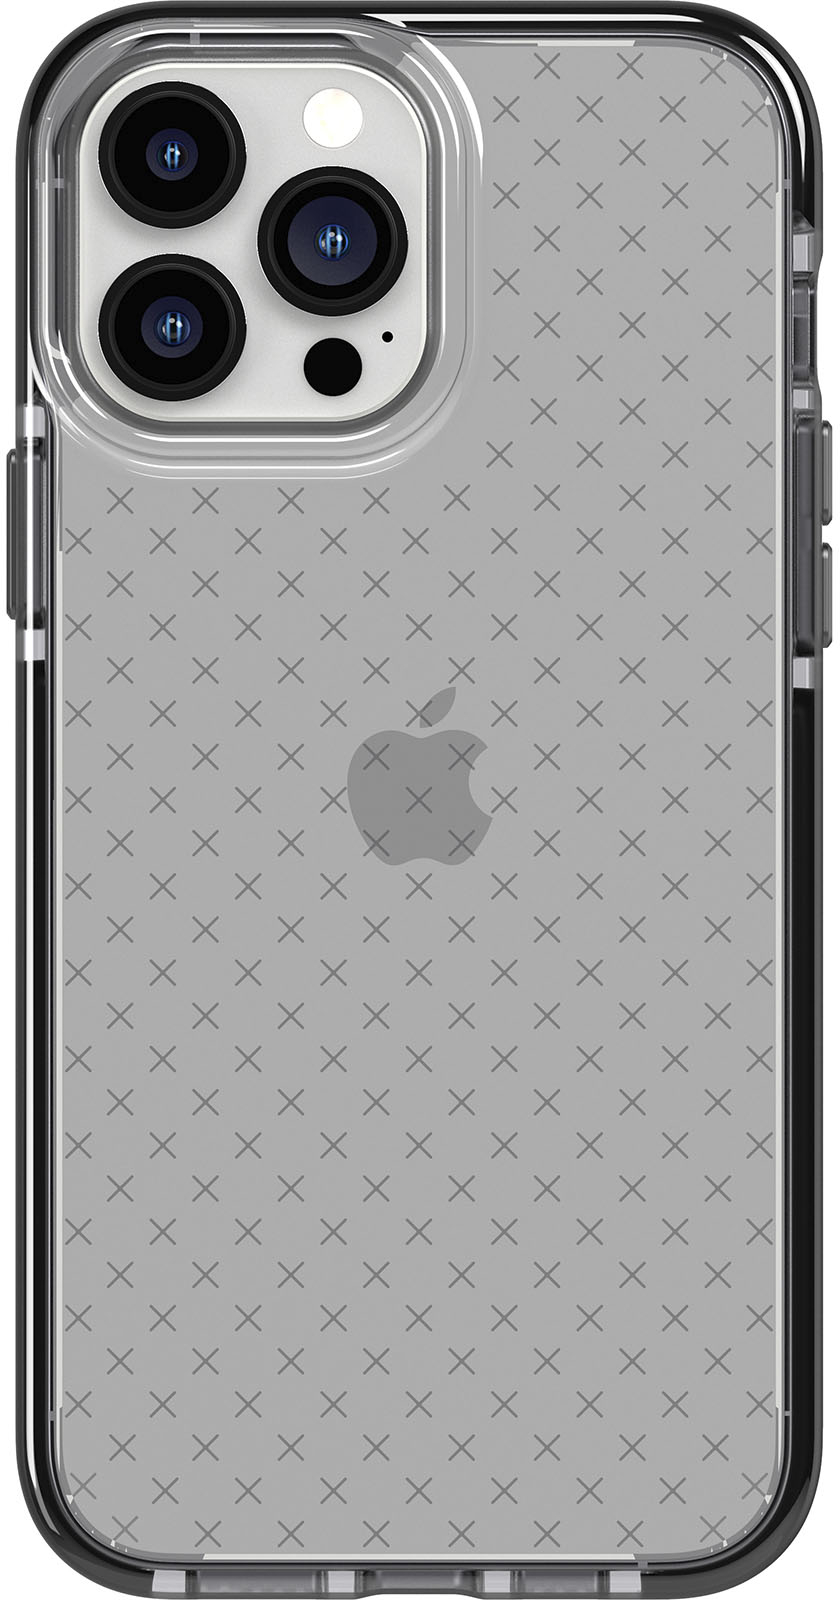 Evo Max - Apple iPhone 13 Pro Max Case - Black